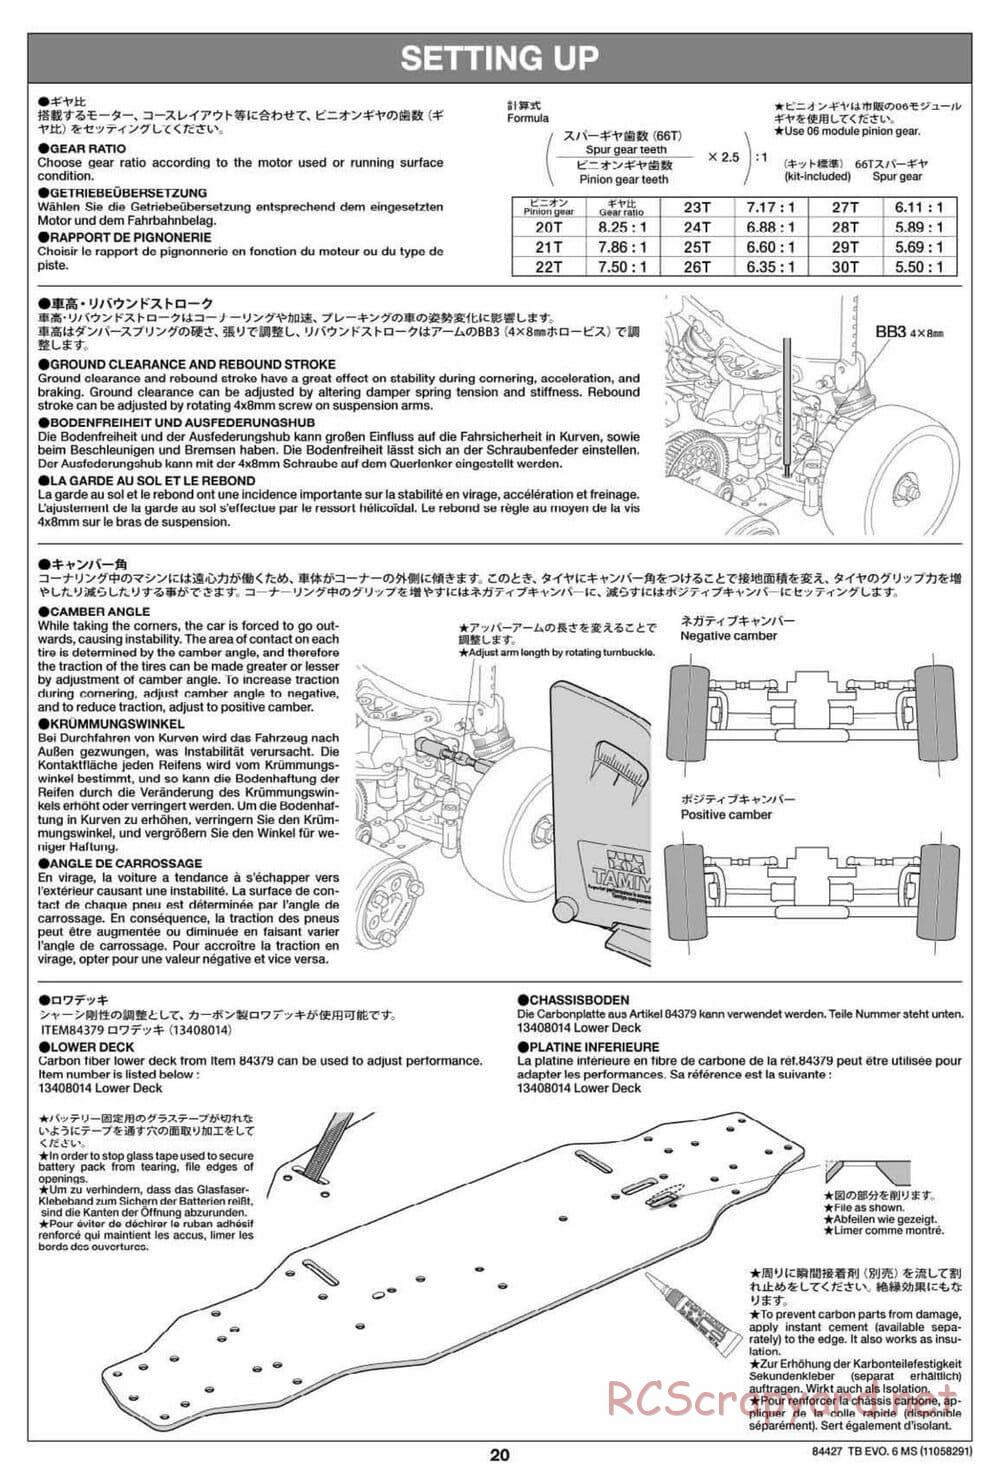 Tamiya - TB Evo.6 MS Chassis - Manual - Page 20